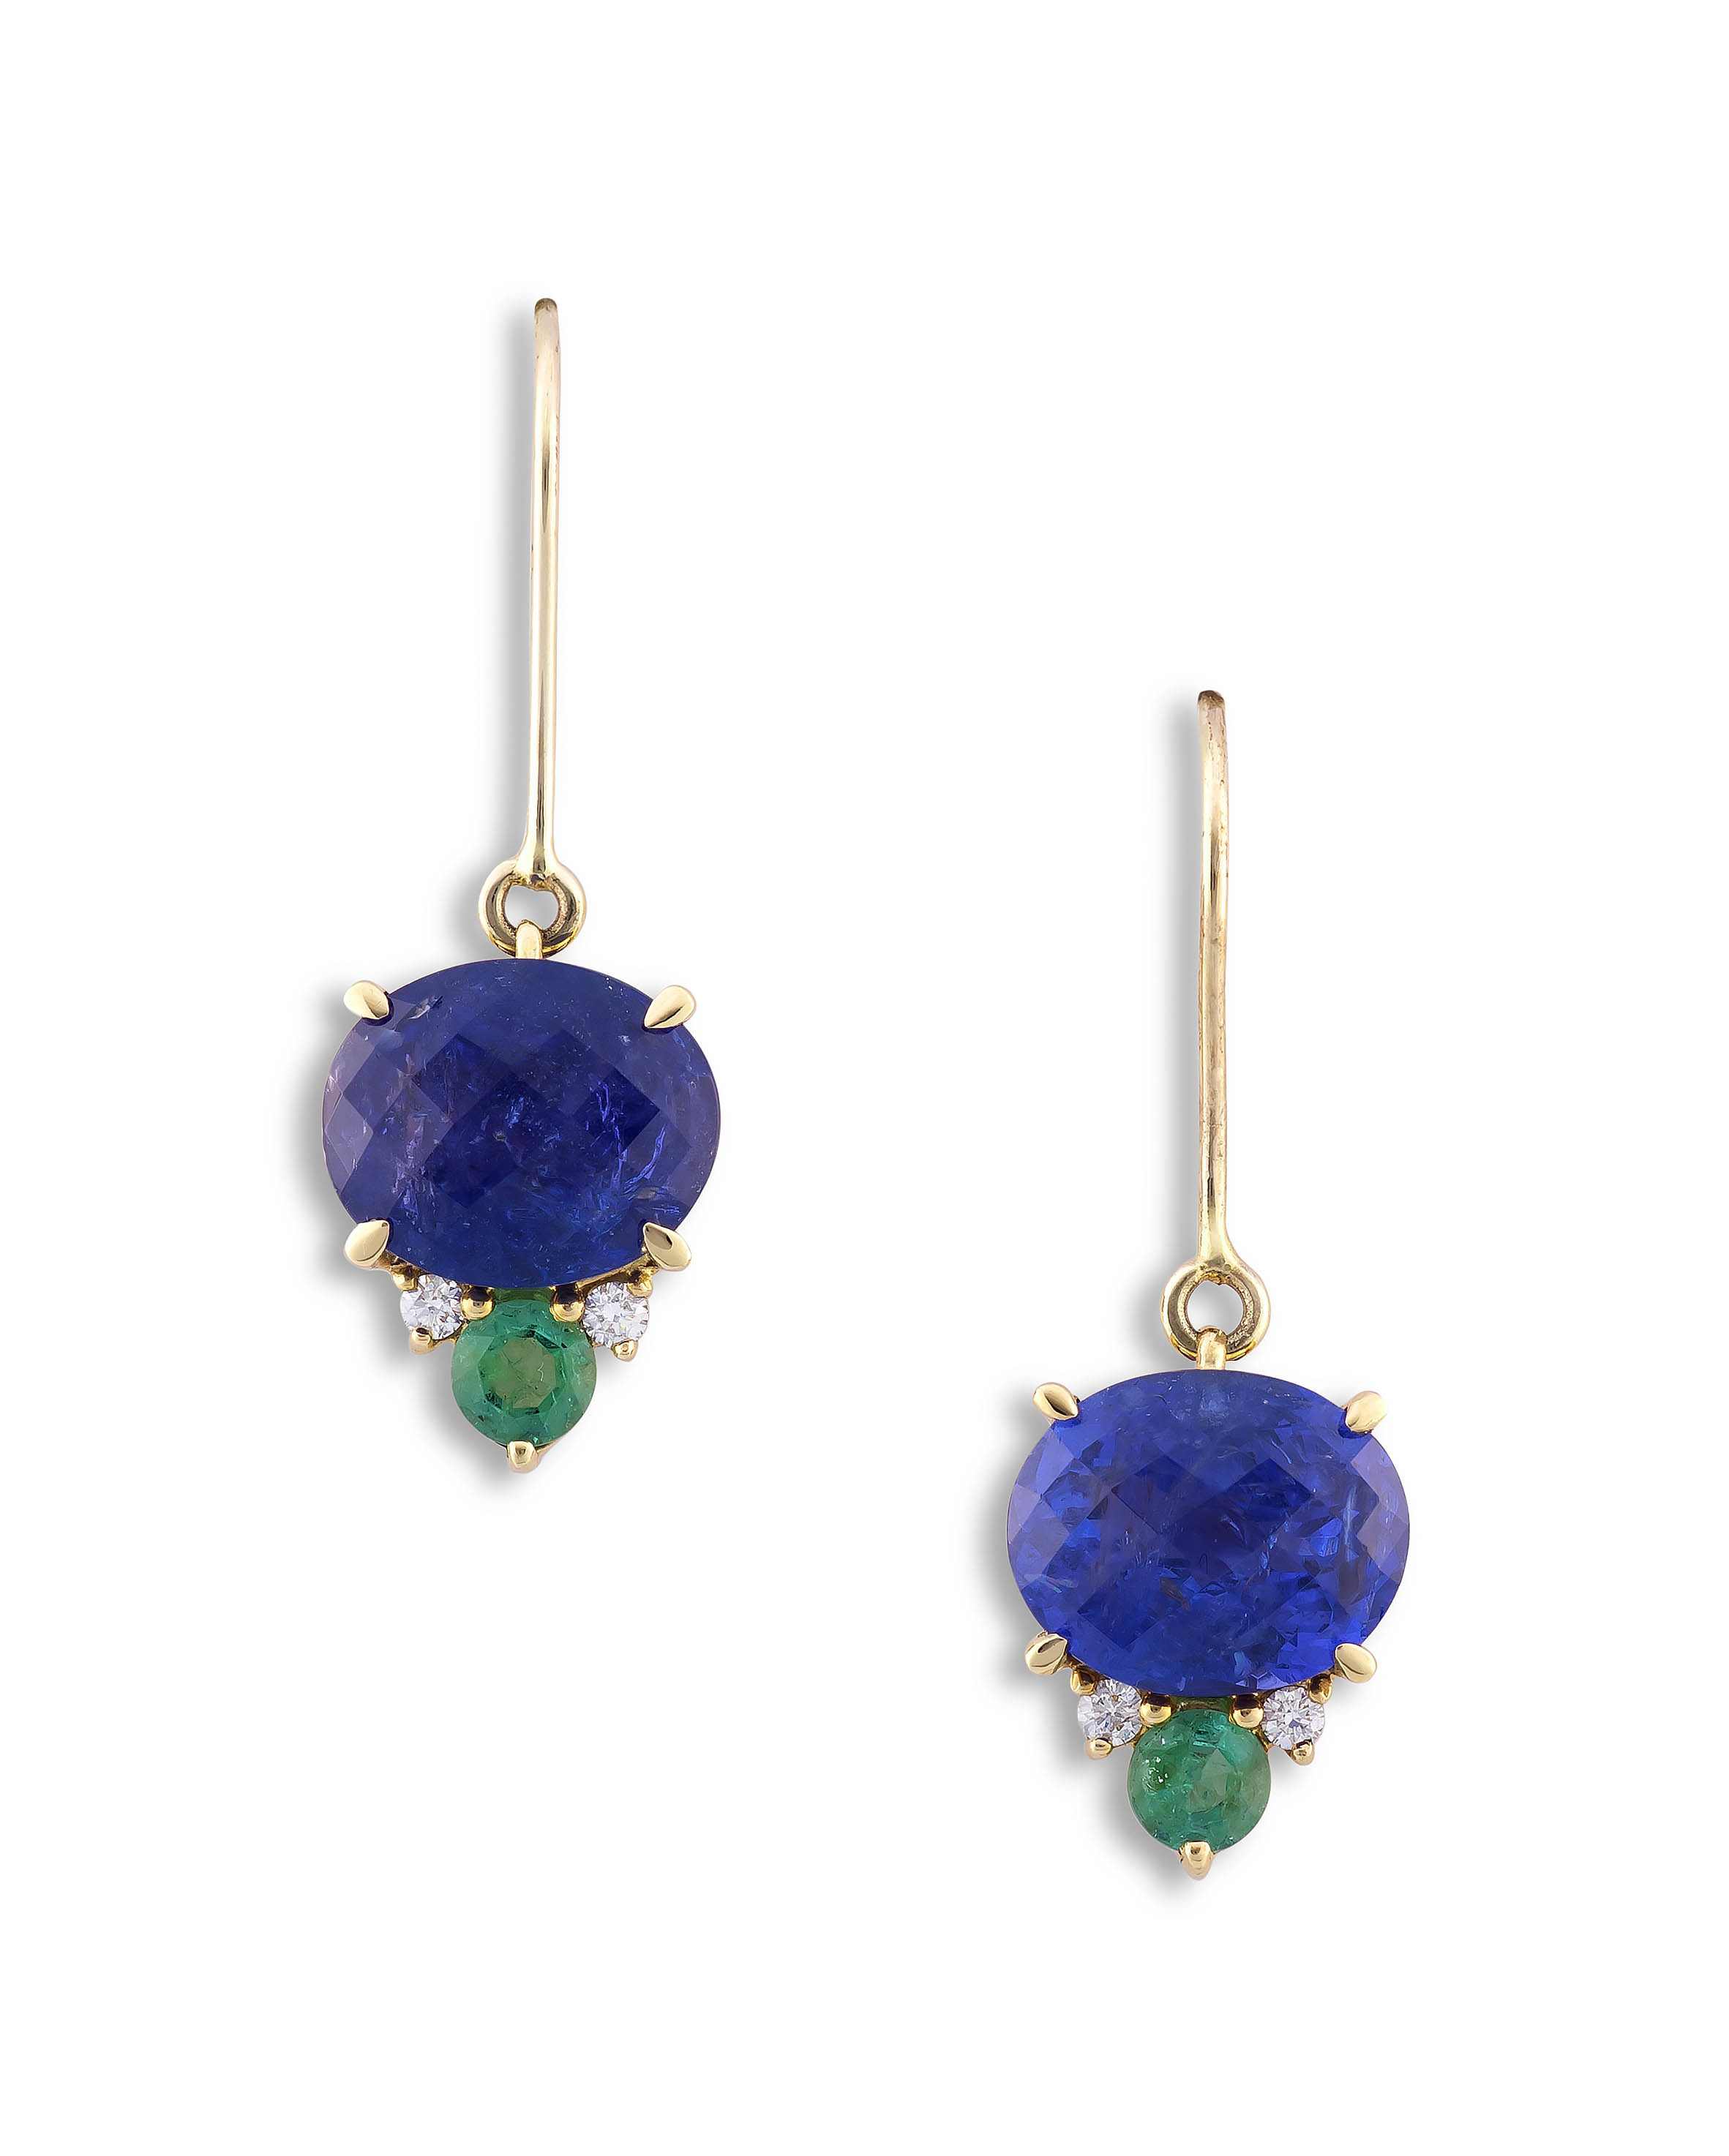 Pair of tanzanite, emerald and diamond earrings, designed by Taz Watson